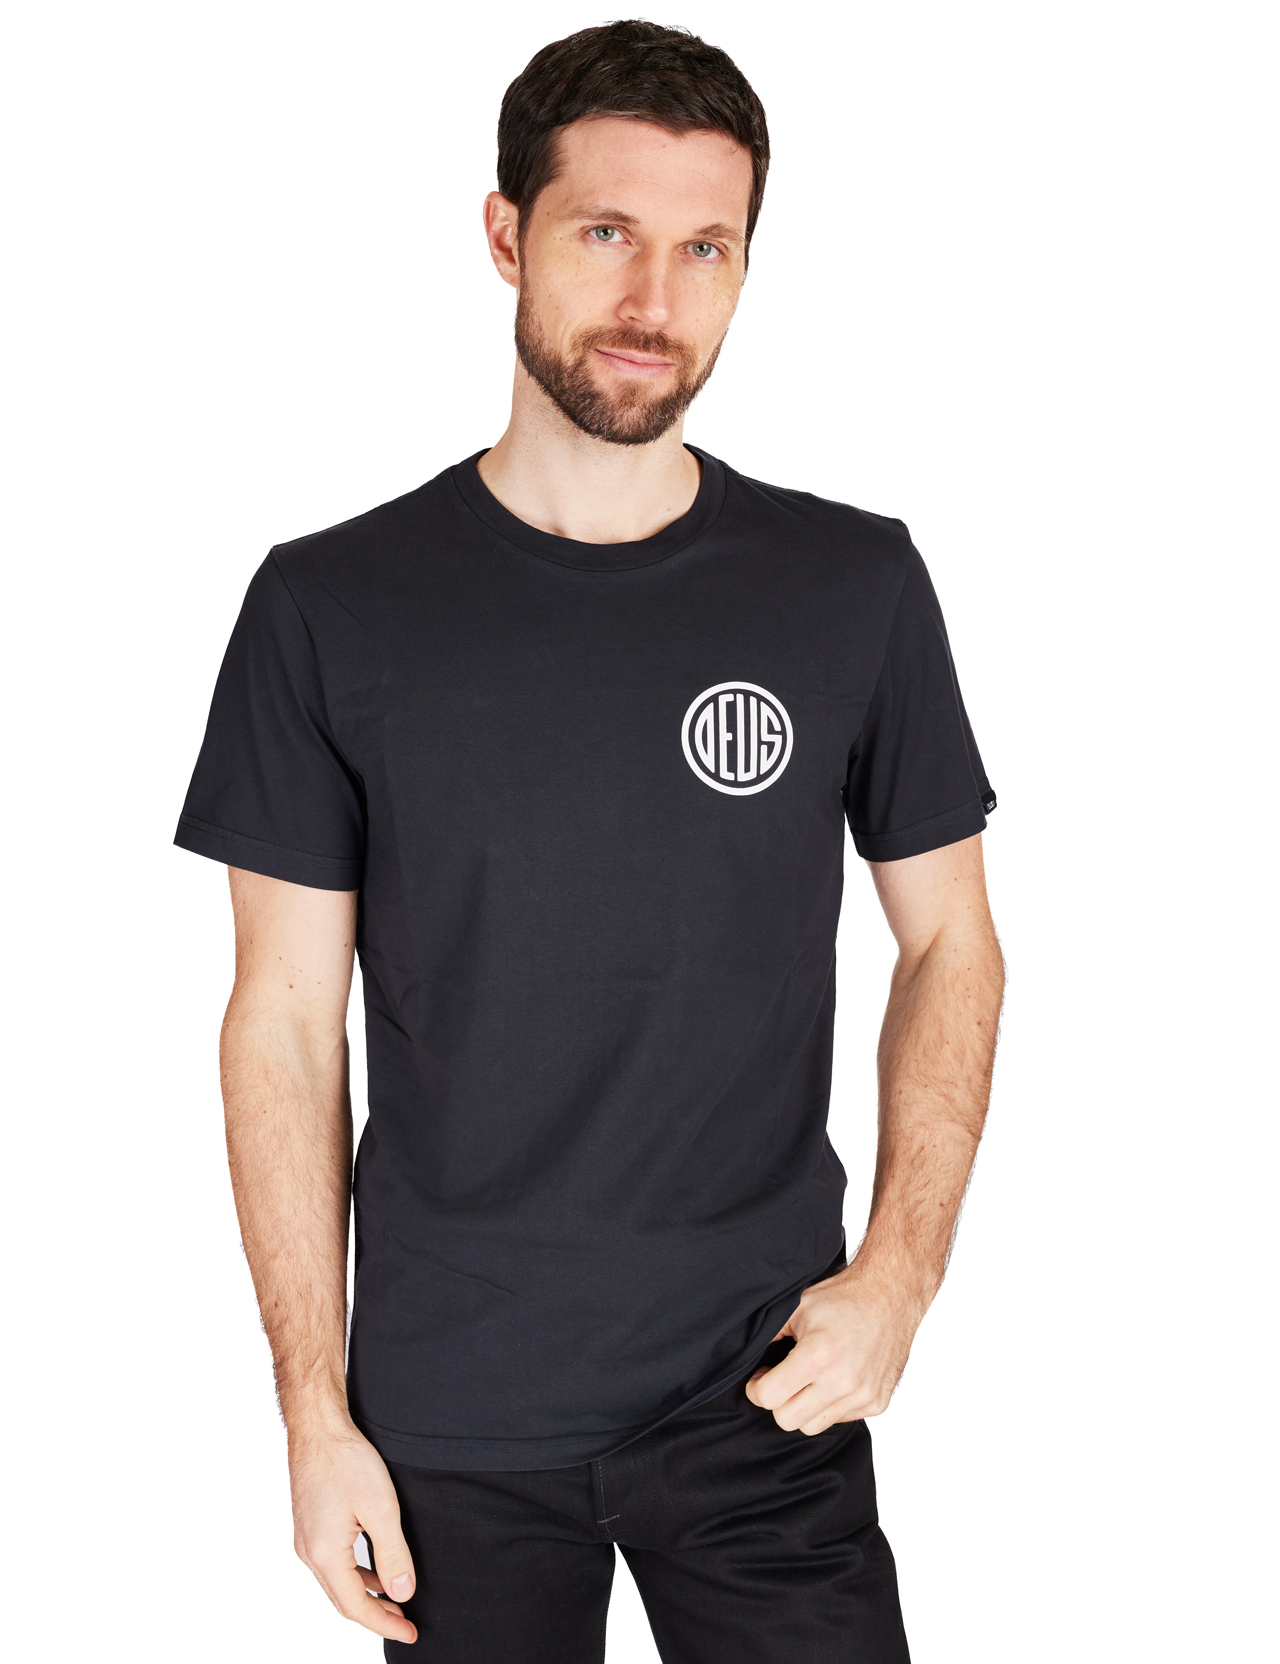 Deus - Clutch T-Shirt - Black